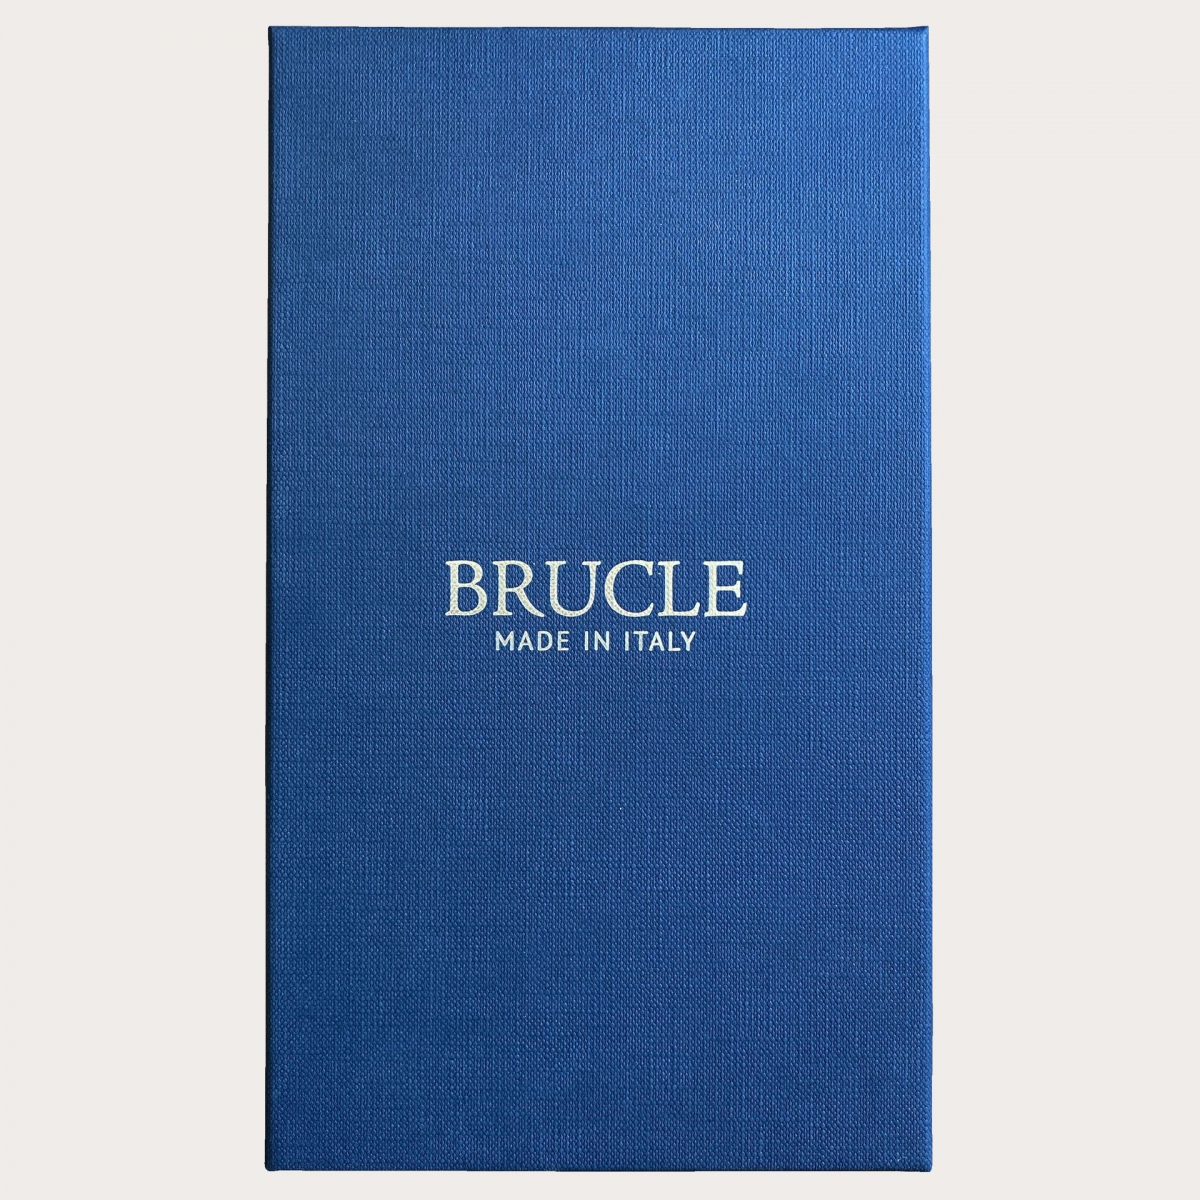 BRUCLE Bretelle unisex nichel free, fantasia fenicotteri